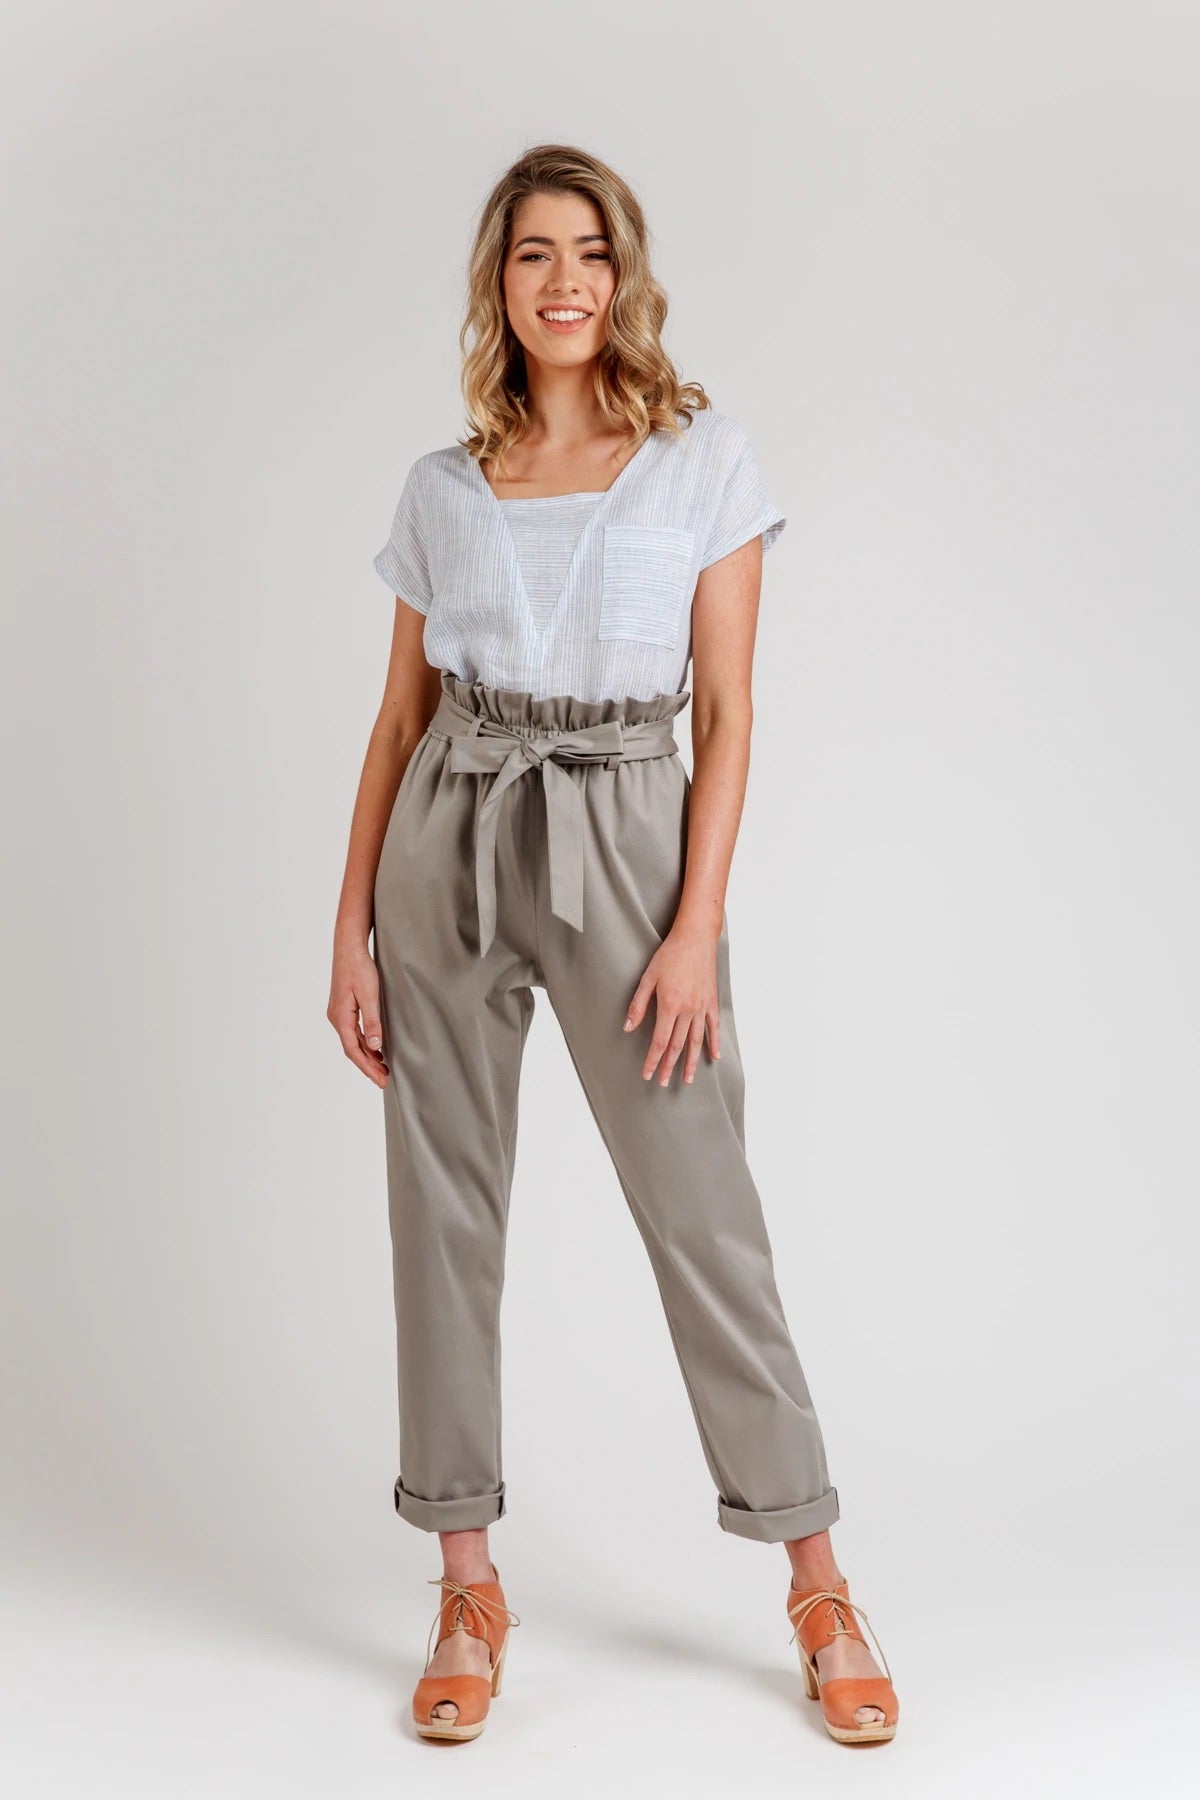 Megan Nielsen - Olive Dress & Top Sewing Pattern